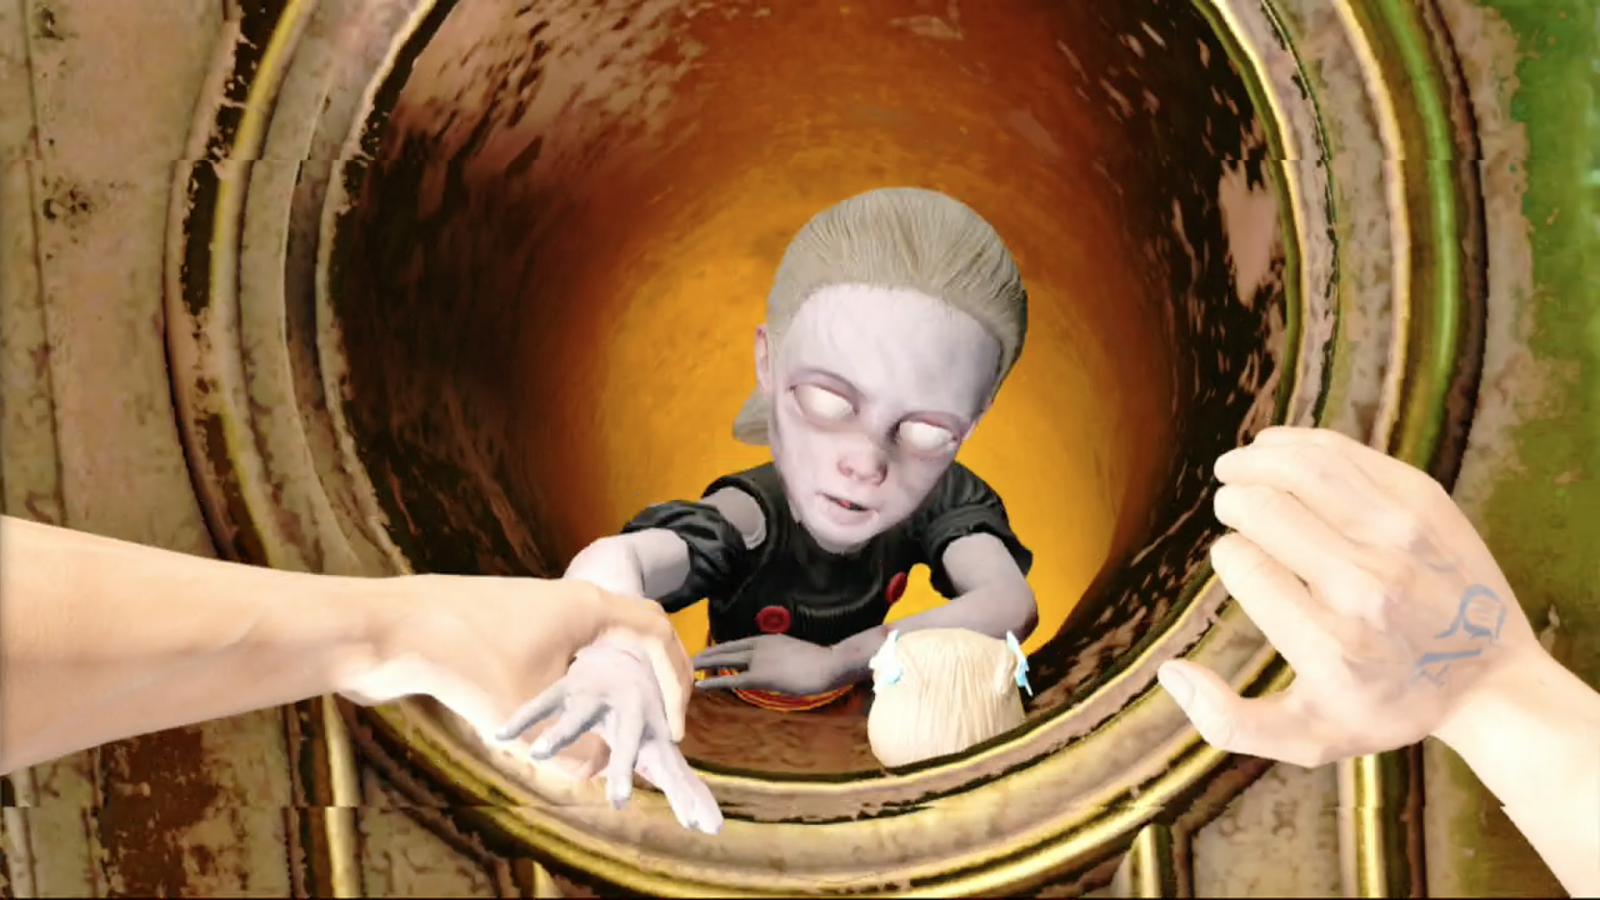 BioShock Infinite: Burial at Sea - Episode 1 Trailer - YouTube